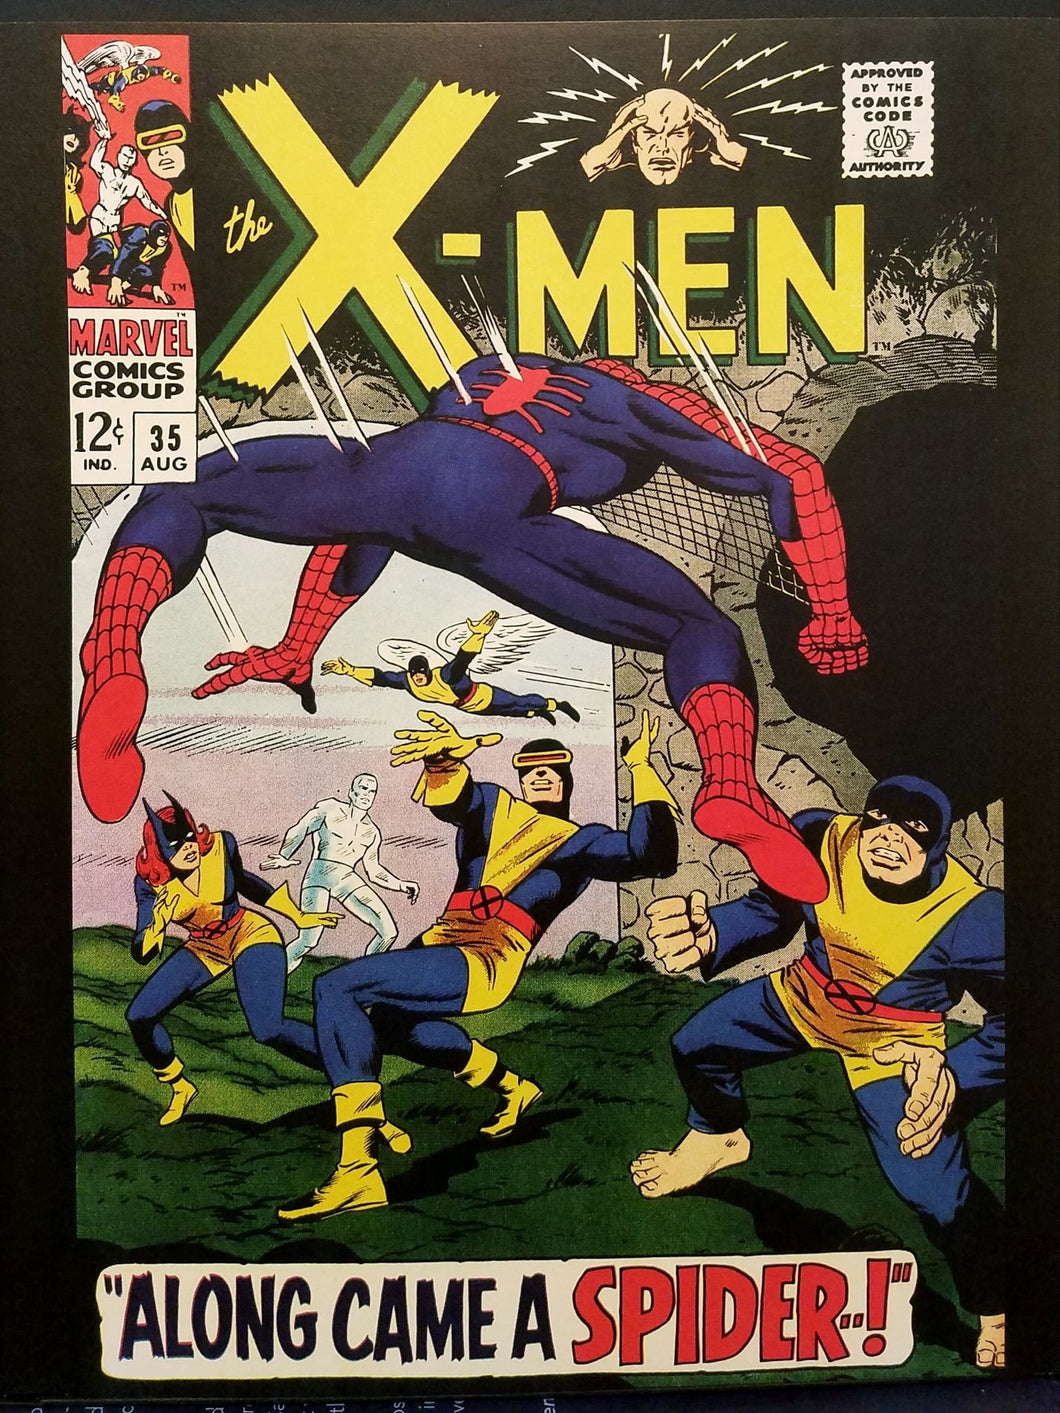 X-Men #35 w/ Spider-Man 11x14 FRAMED Art Print, Vintage 1967 Marvel Comics